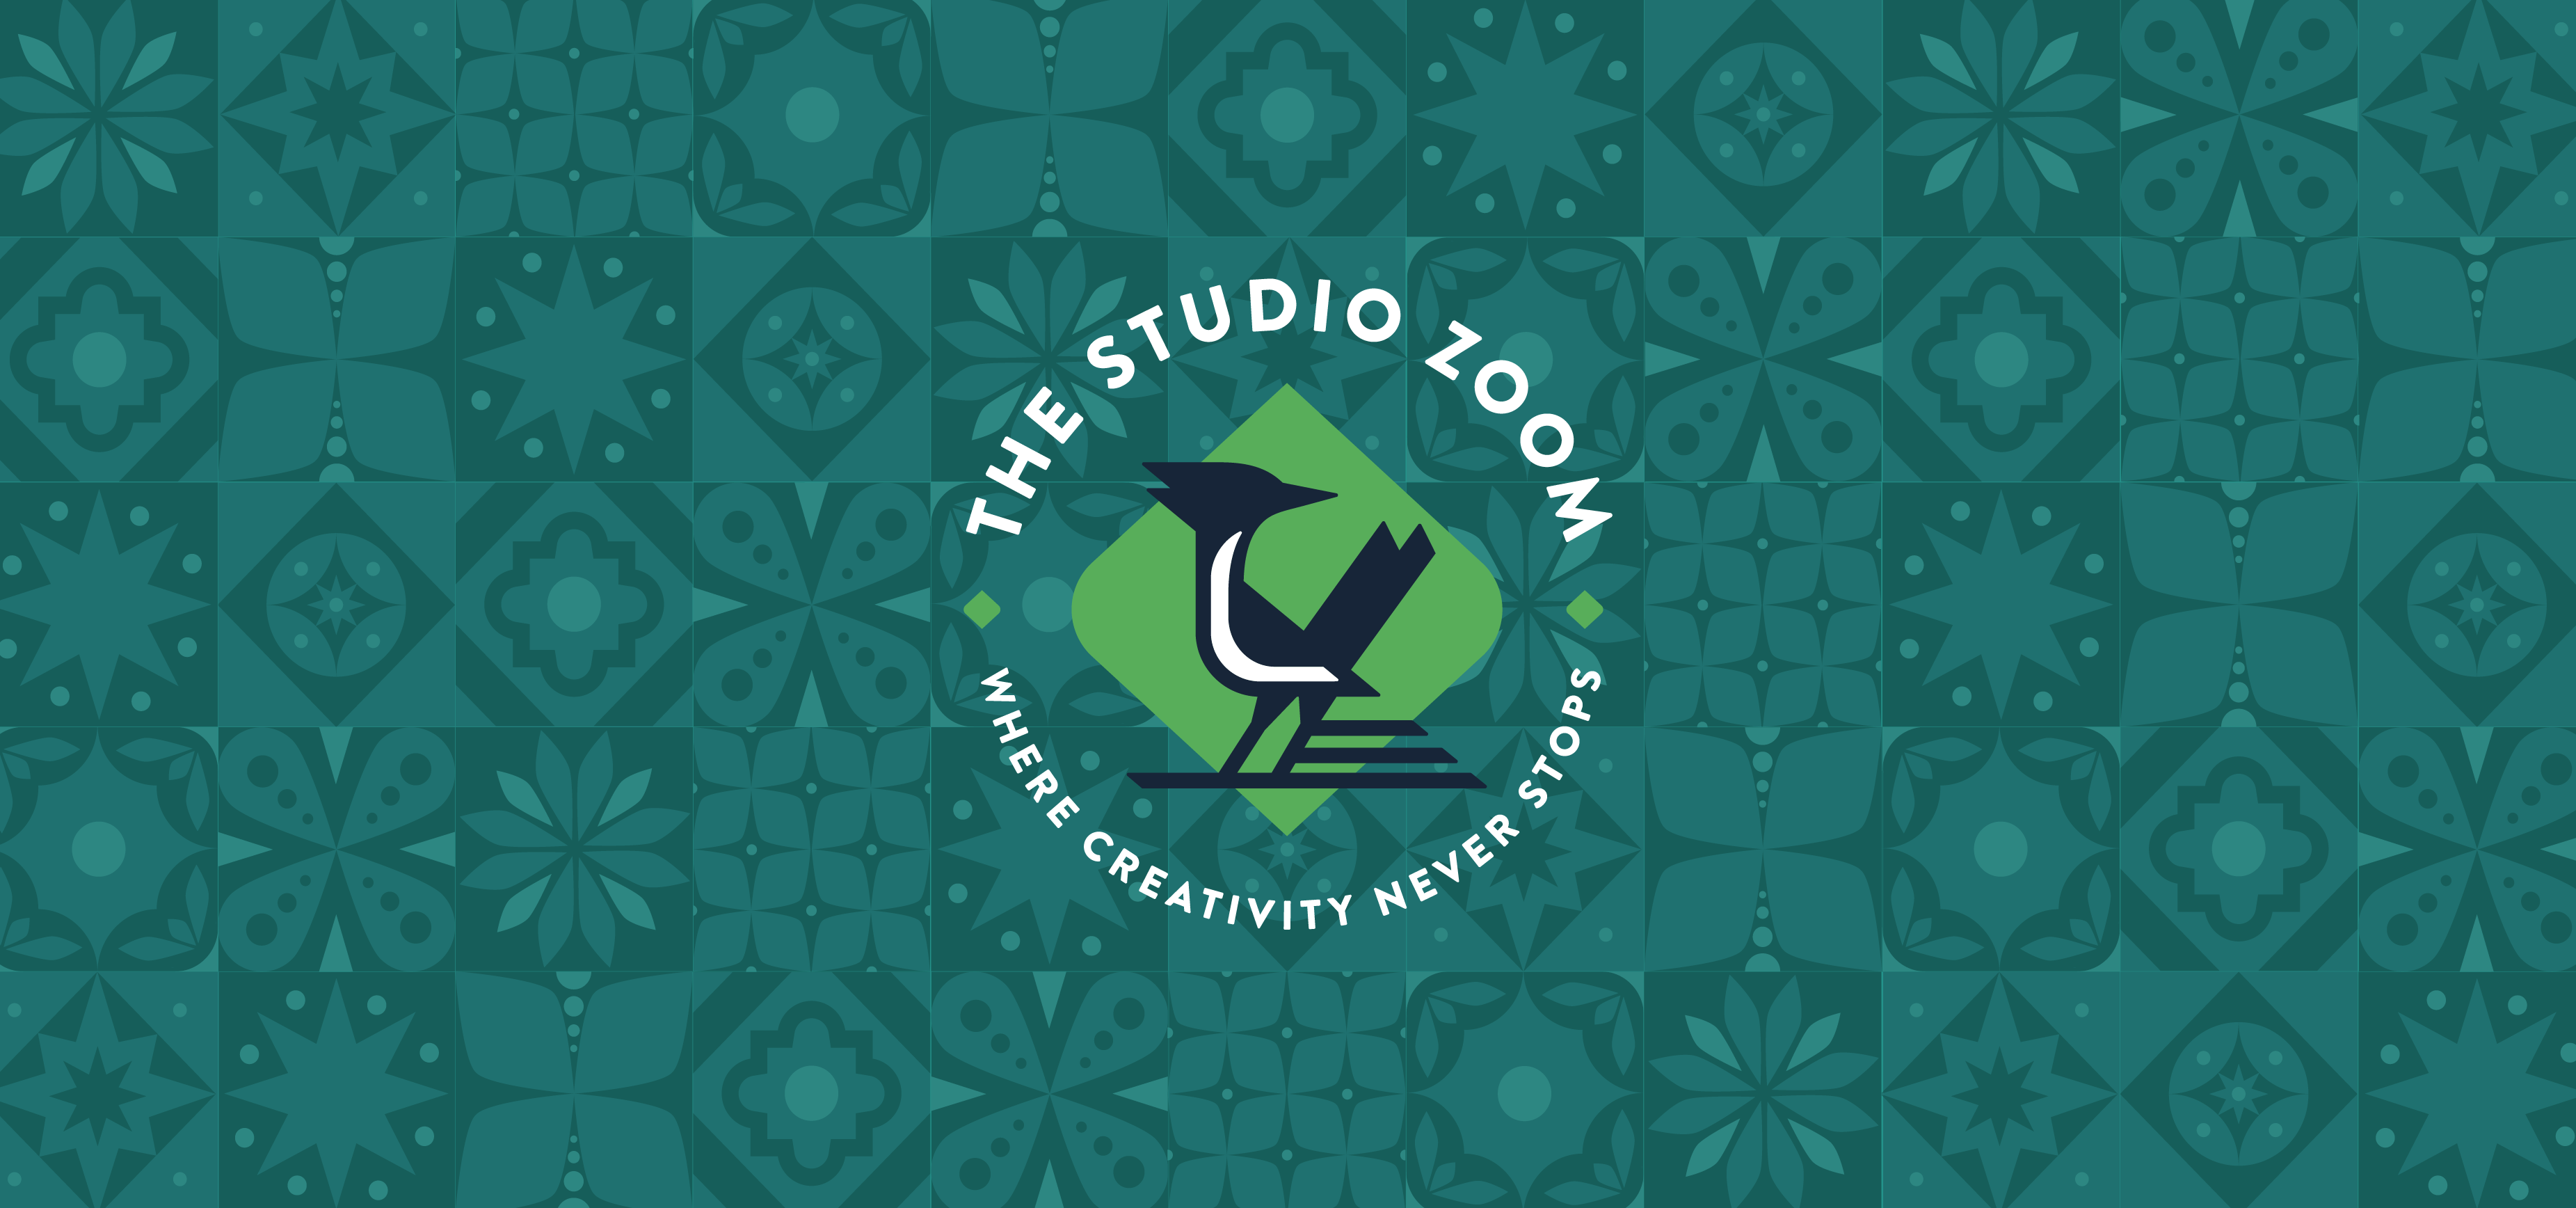 The Studio Zoom Graphic Design